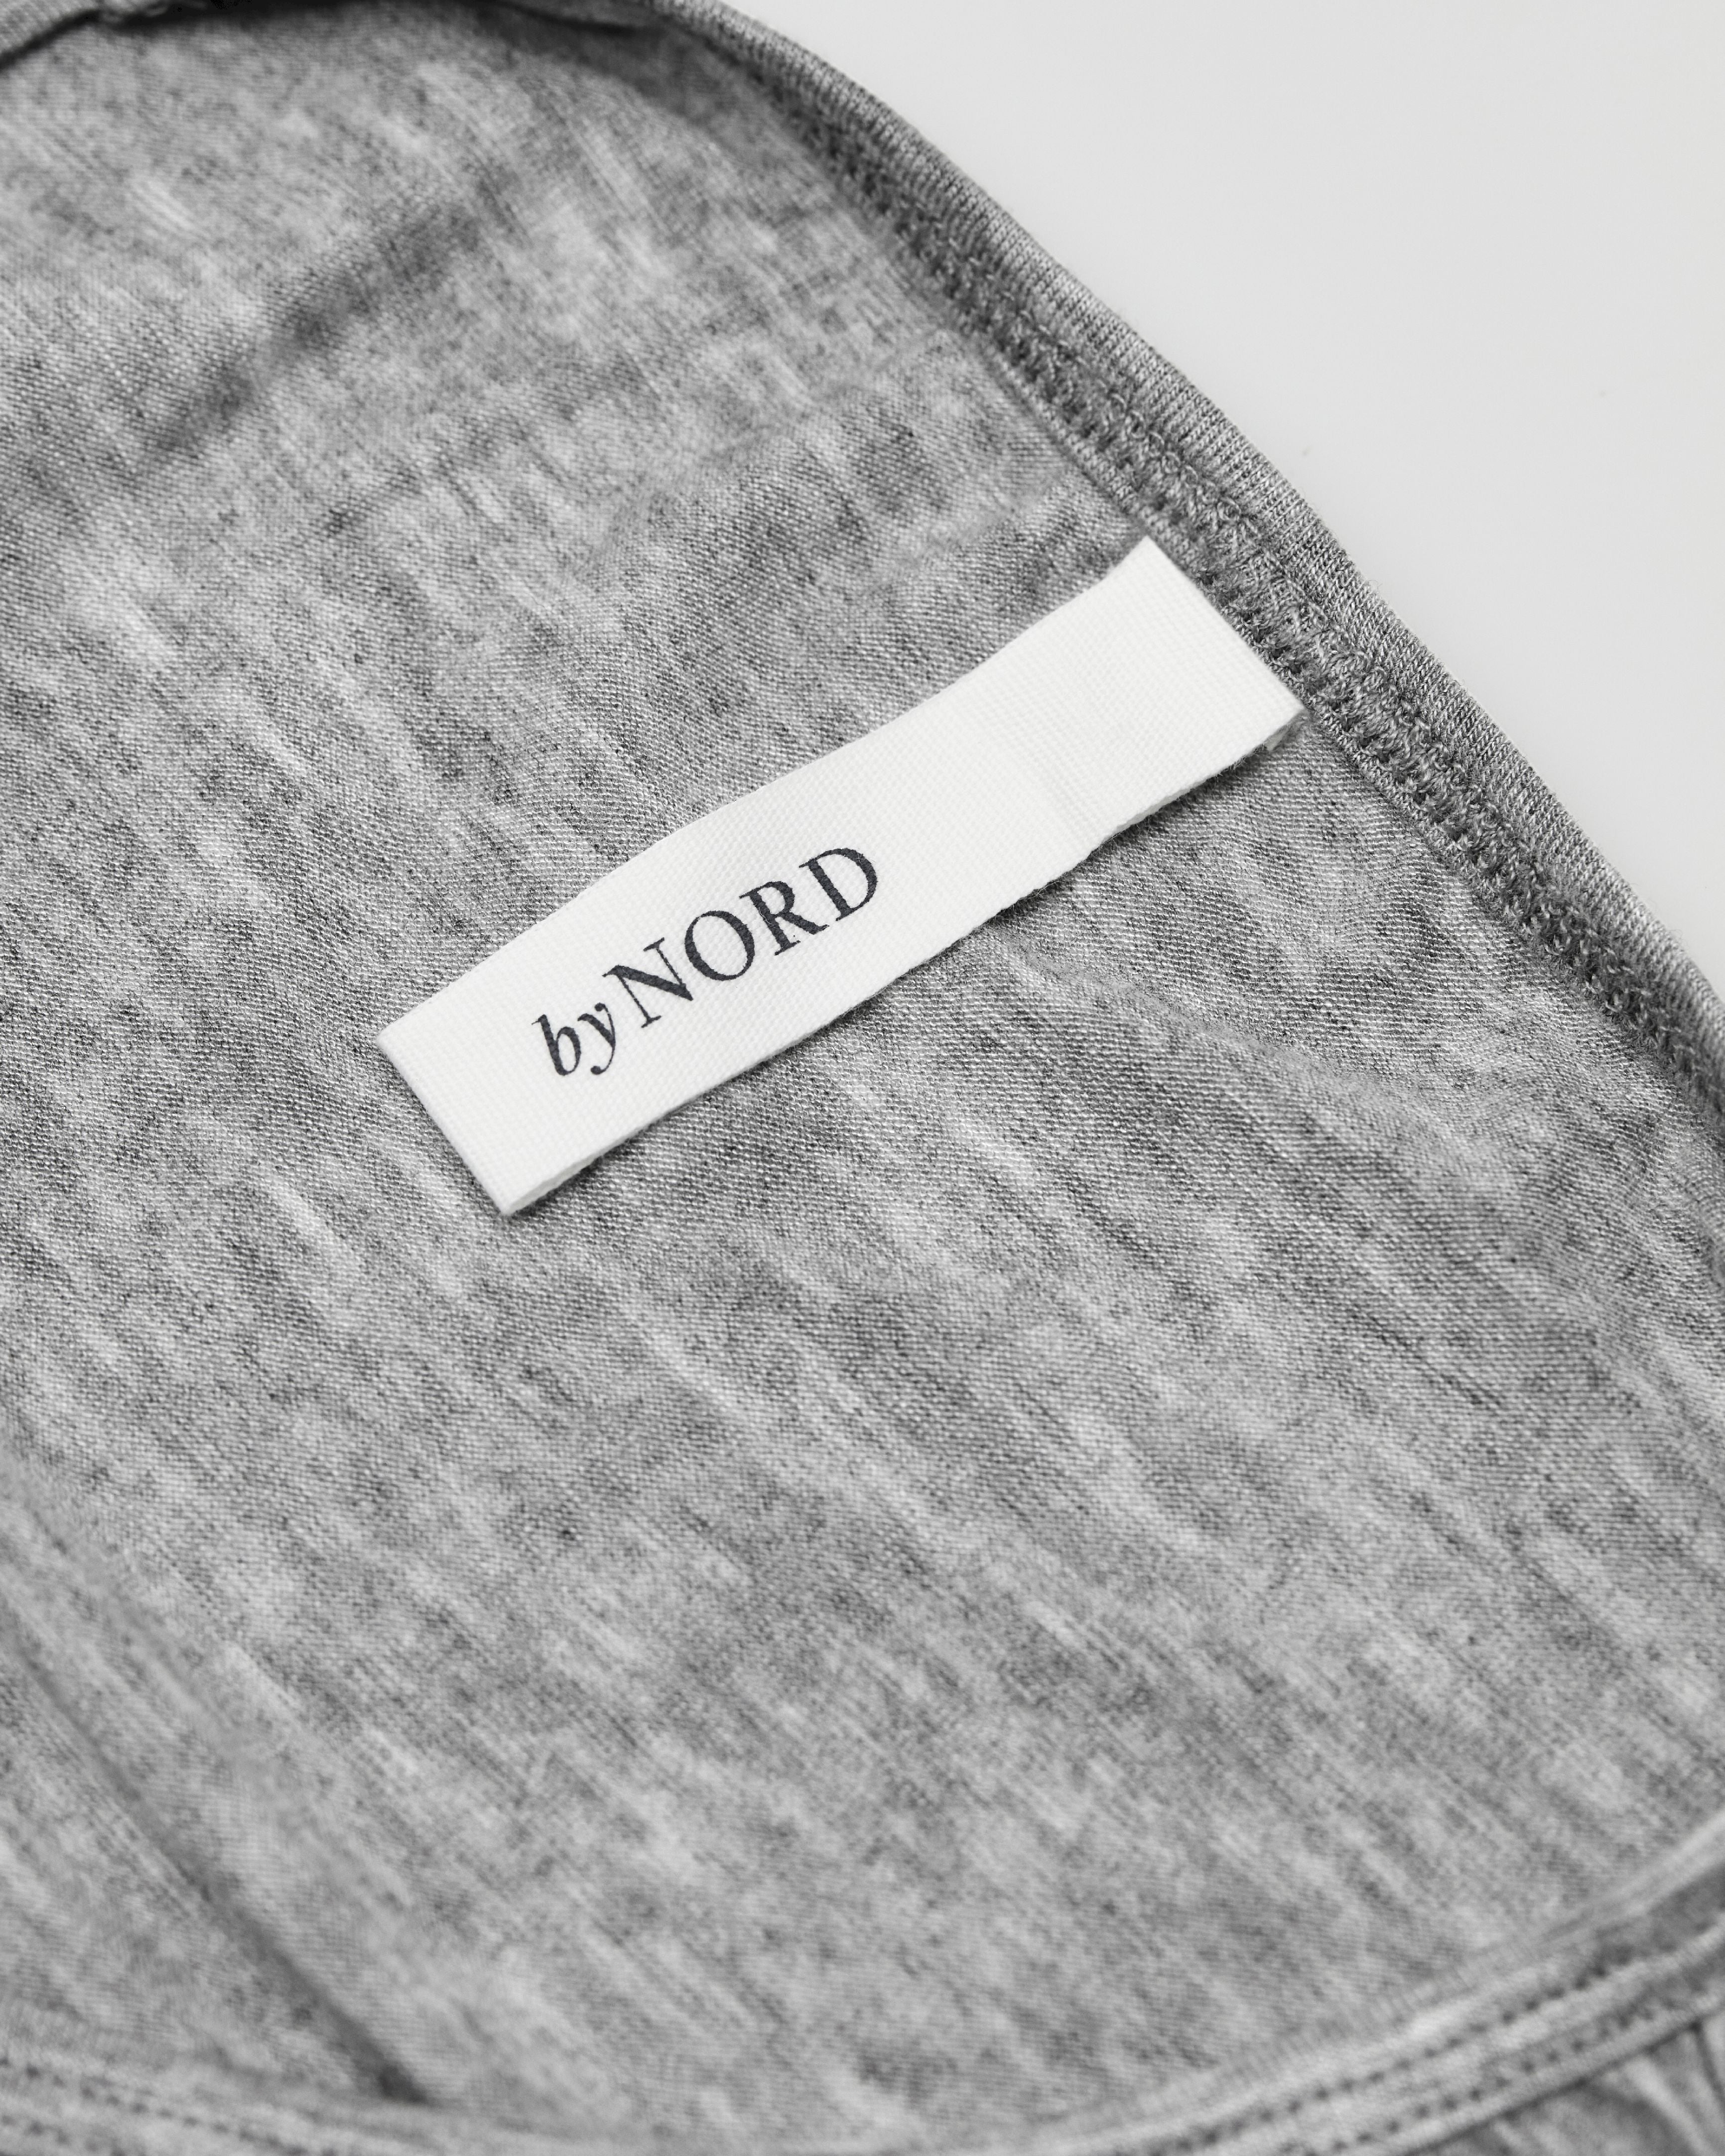 Par Nord Winter Astrid Loungewear S / M, jupe